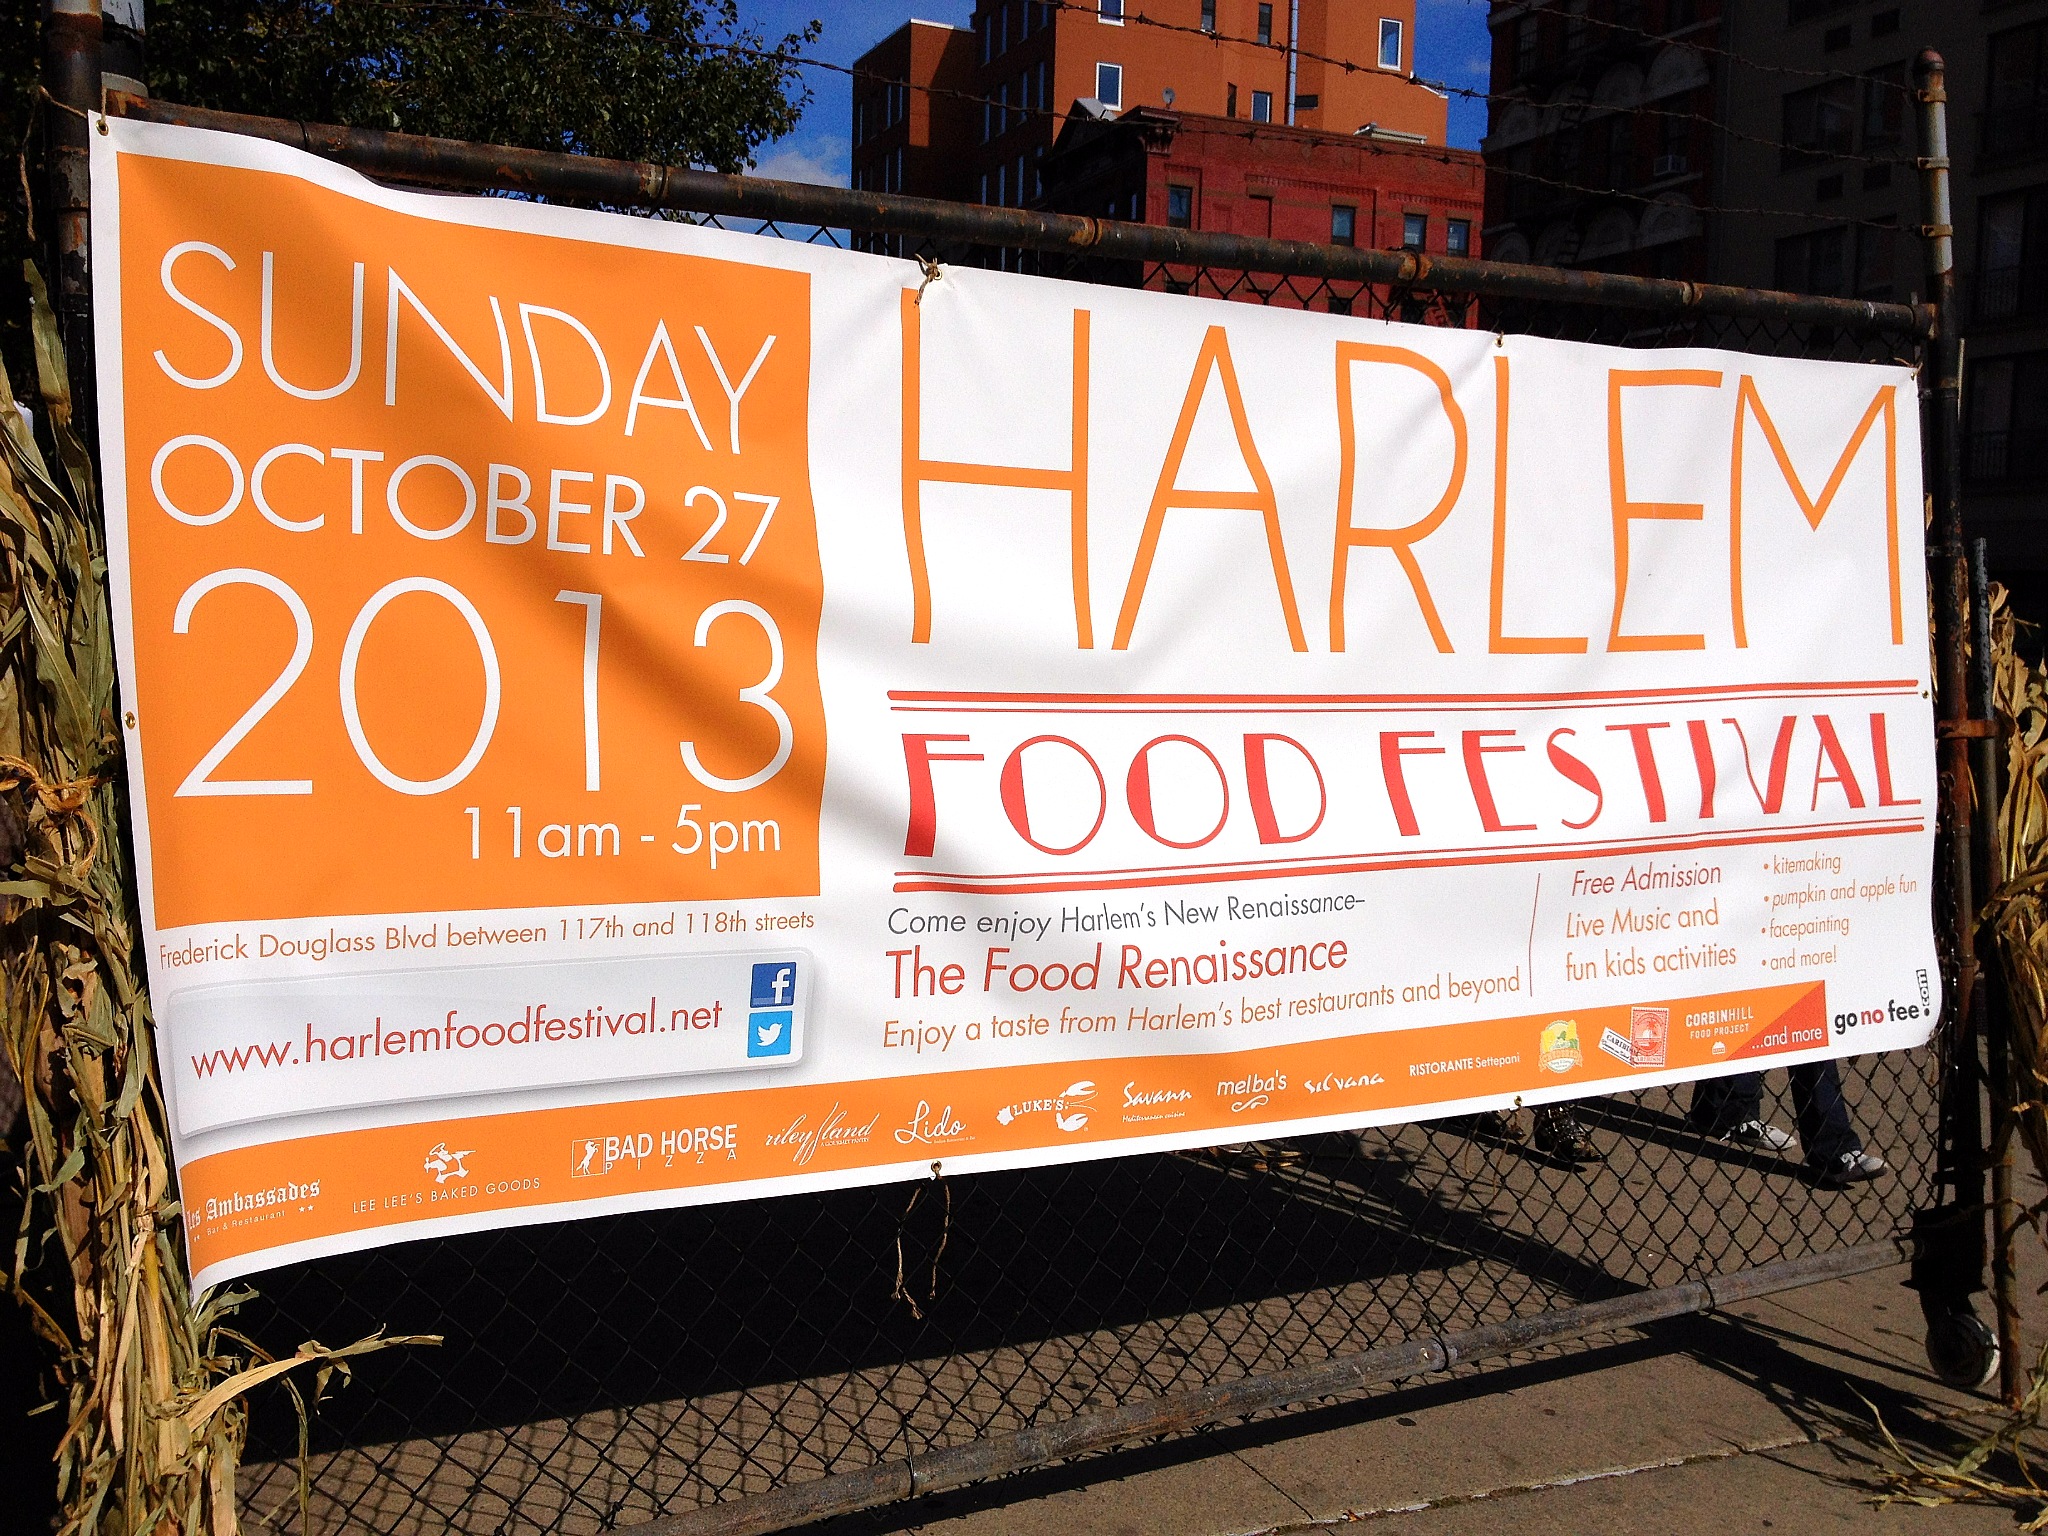 Harlem Food Festival & Frederick Douglass Blvd Big Apple Curry